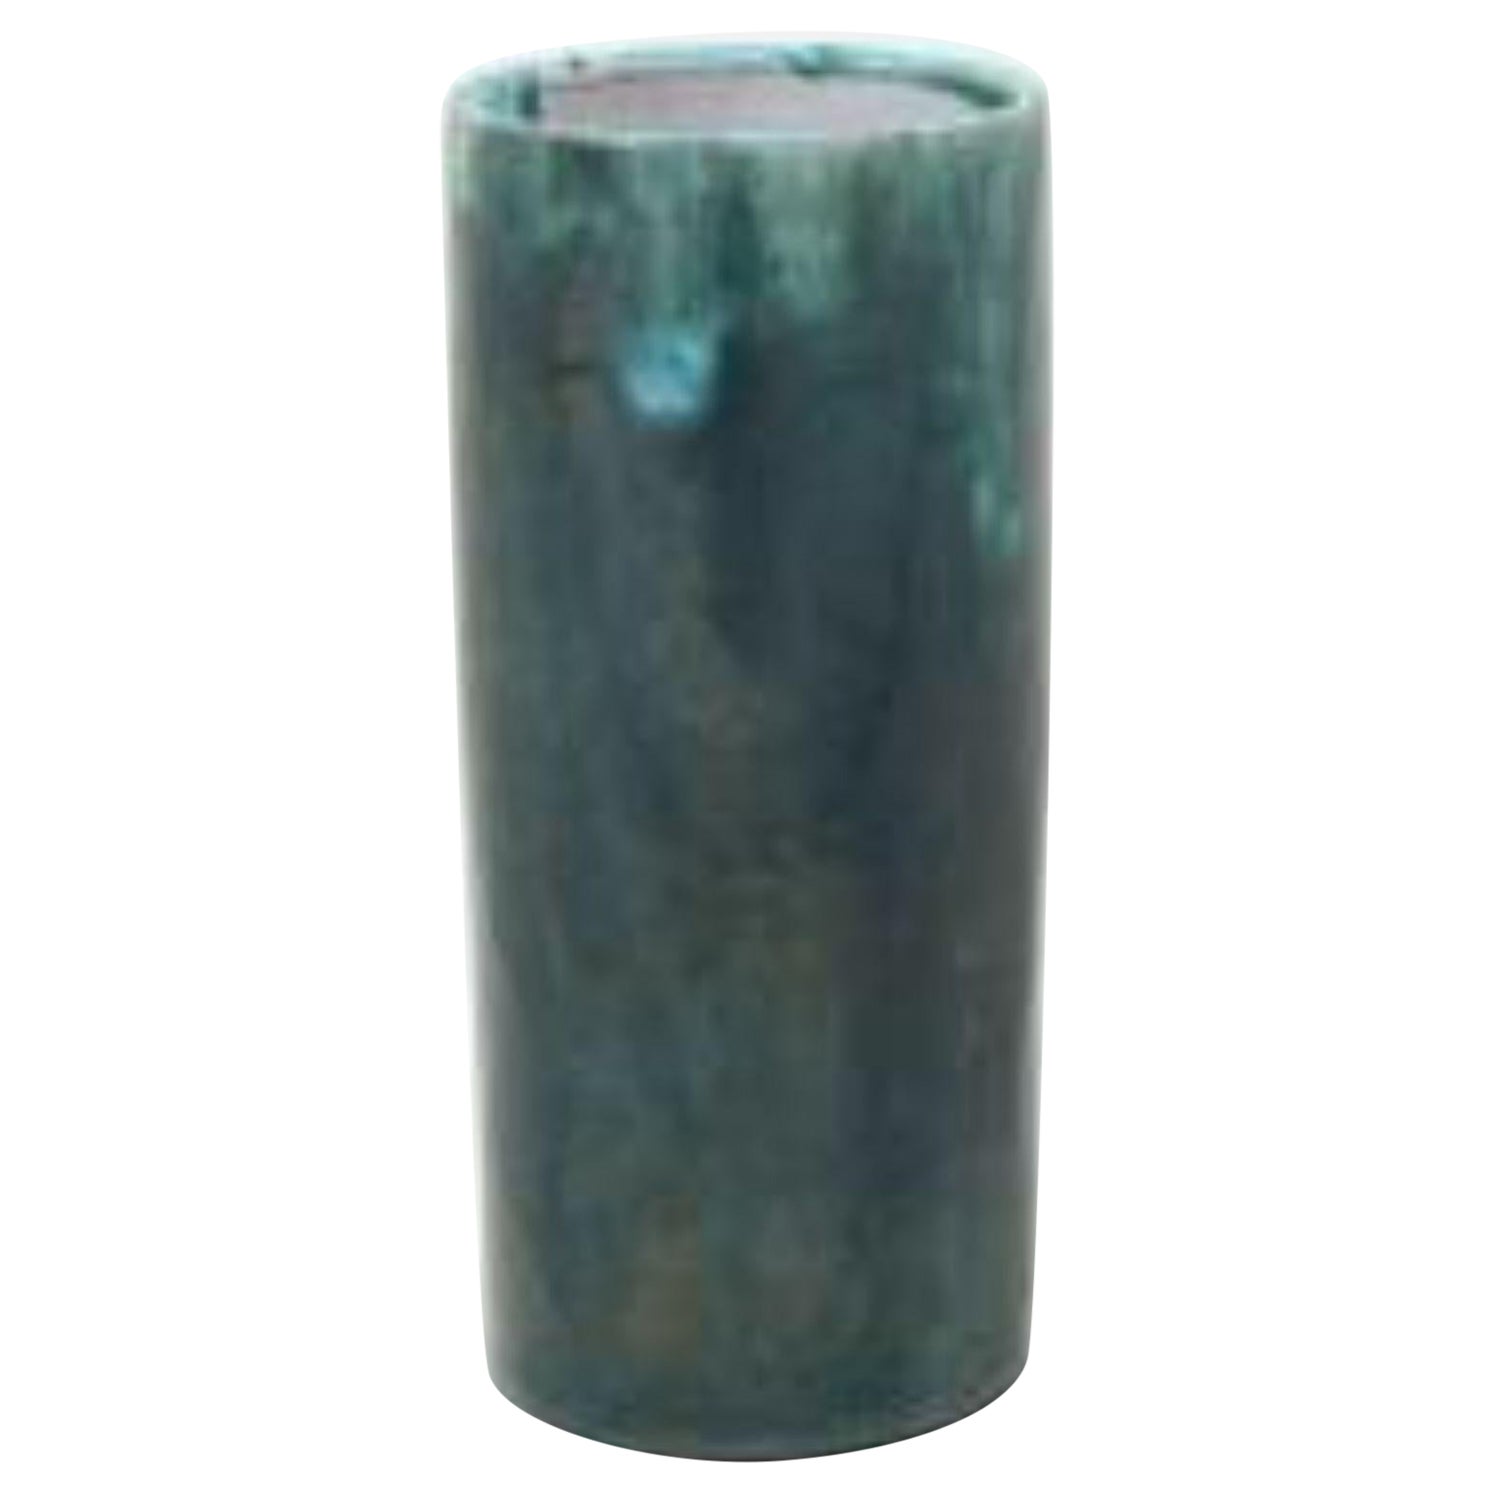 Vase cylindrique en céramique émaillée verte, Biot, France, vers 1950